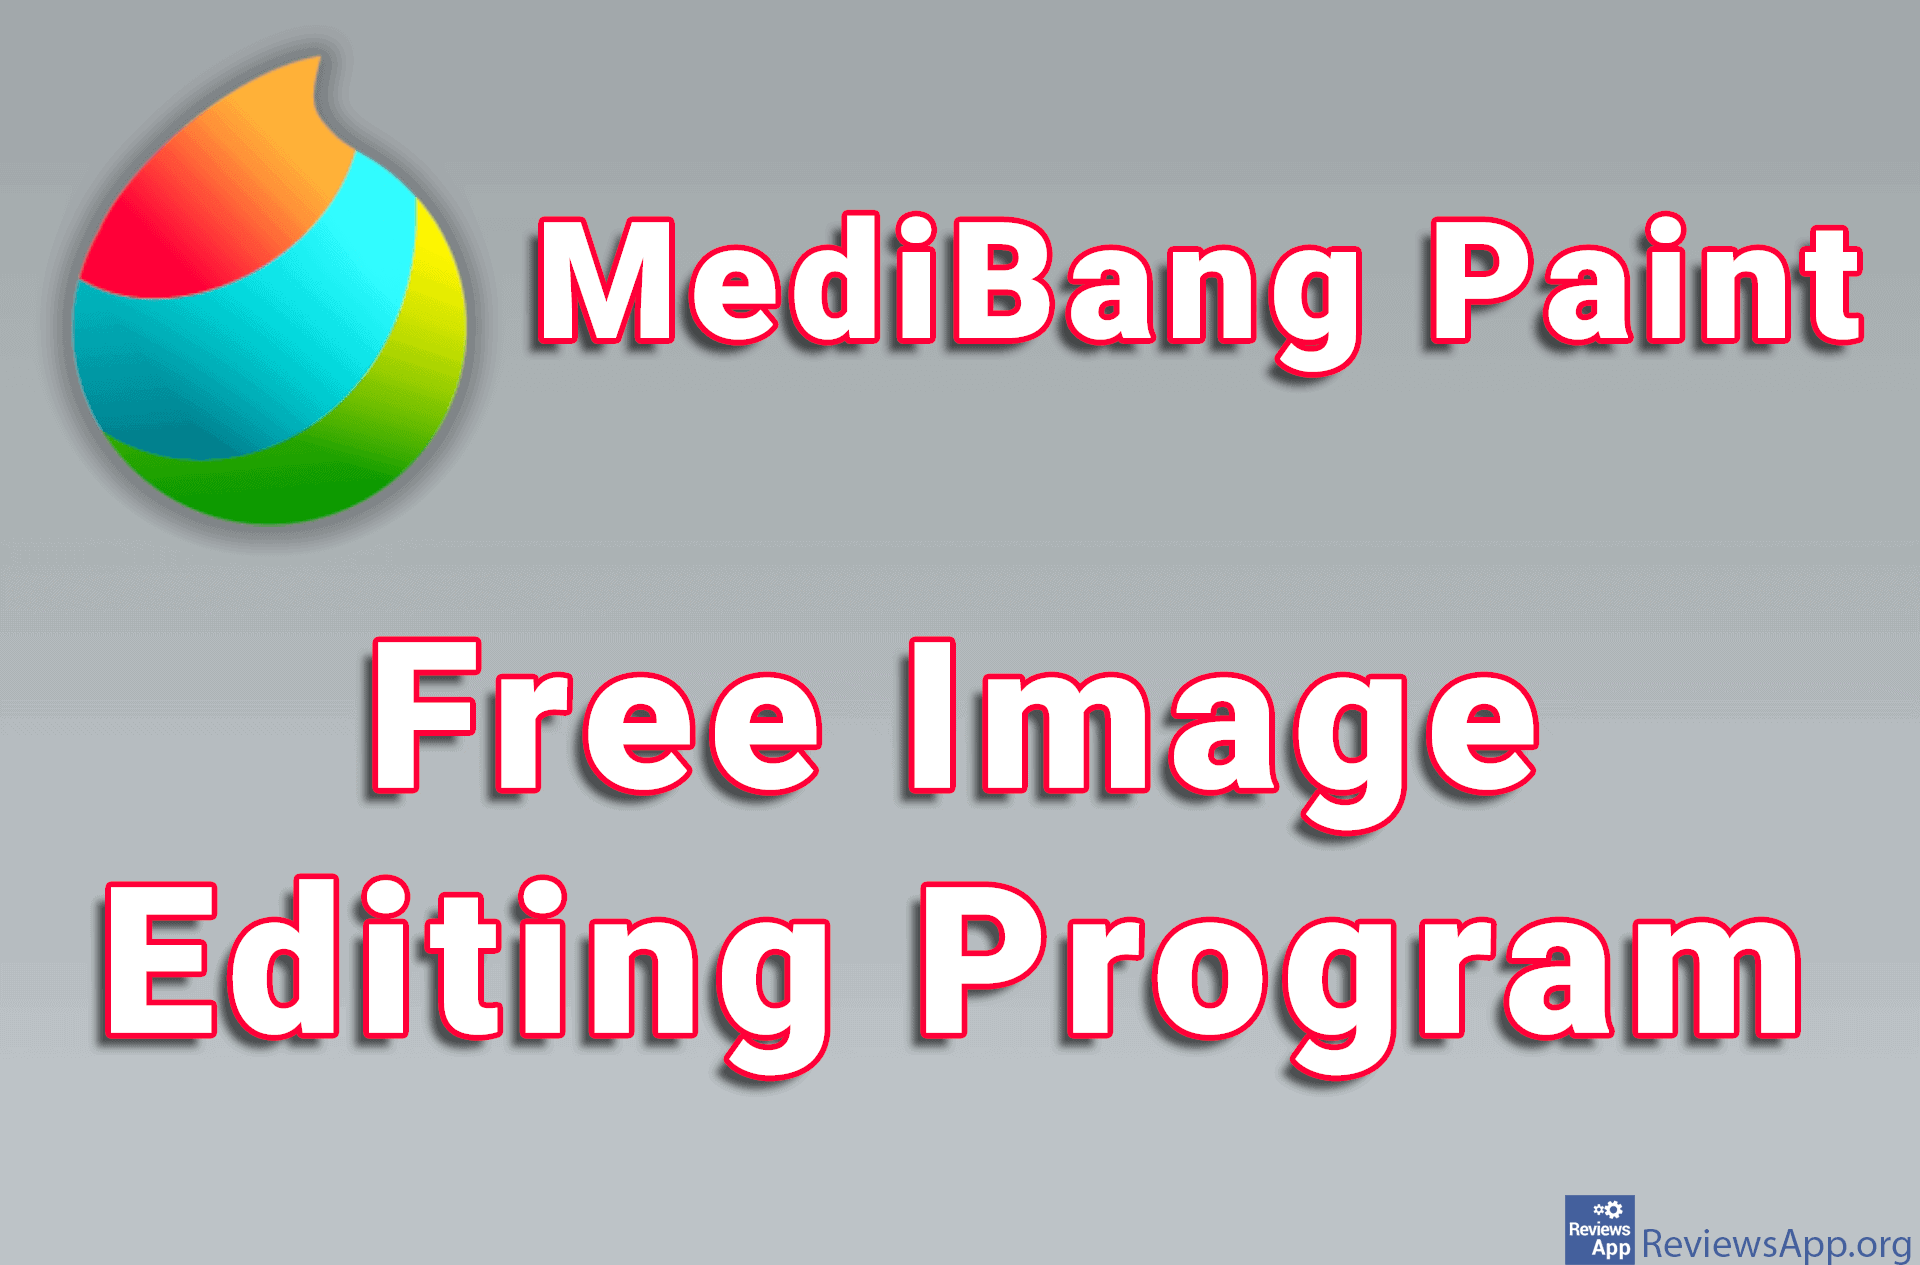 MediBang Paint – Free Image Editing Program